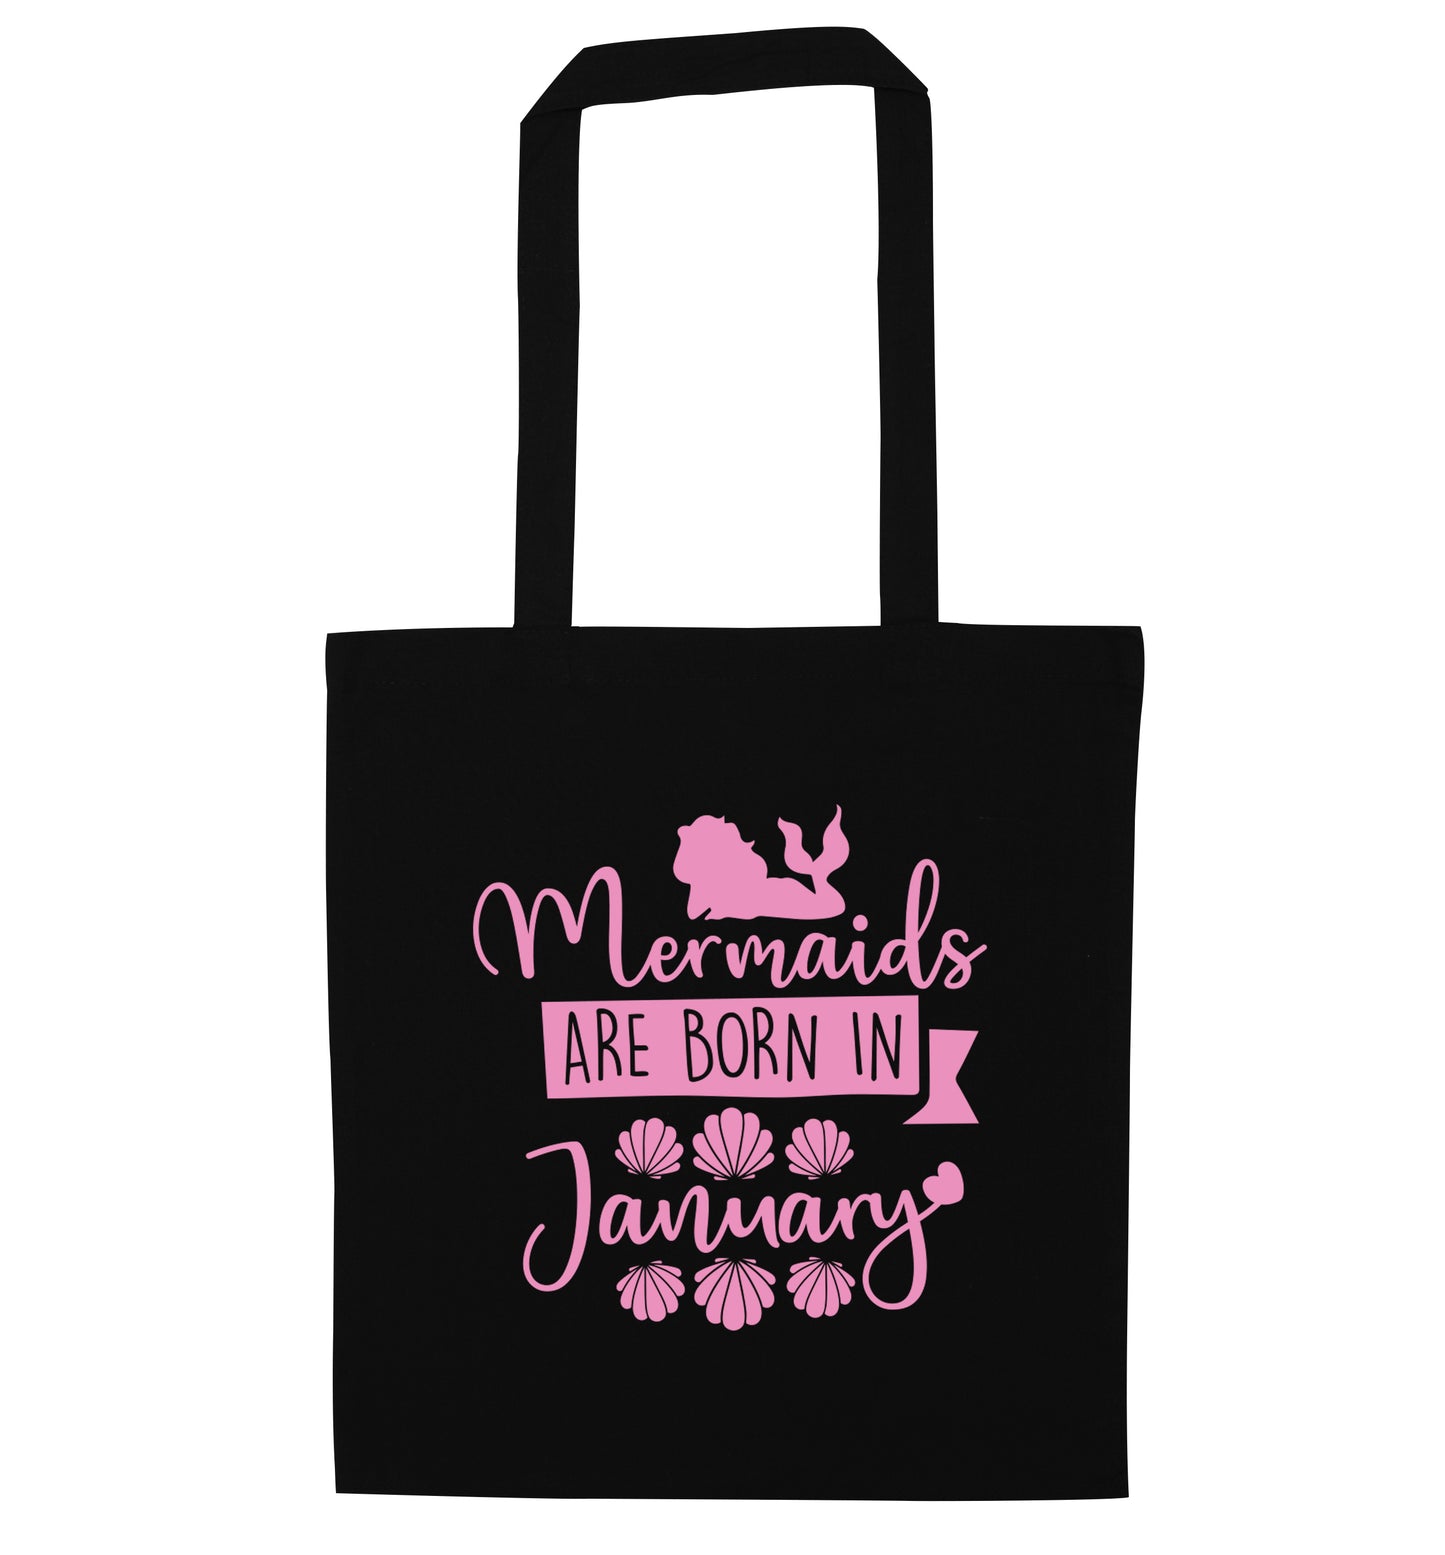 Mermaids are born in January black tote bag